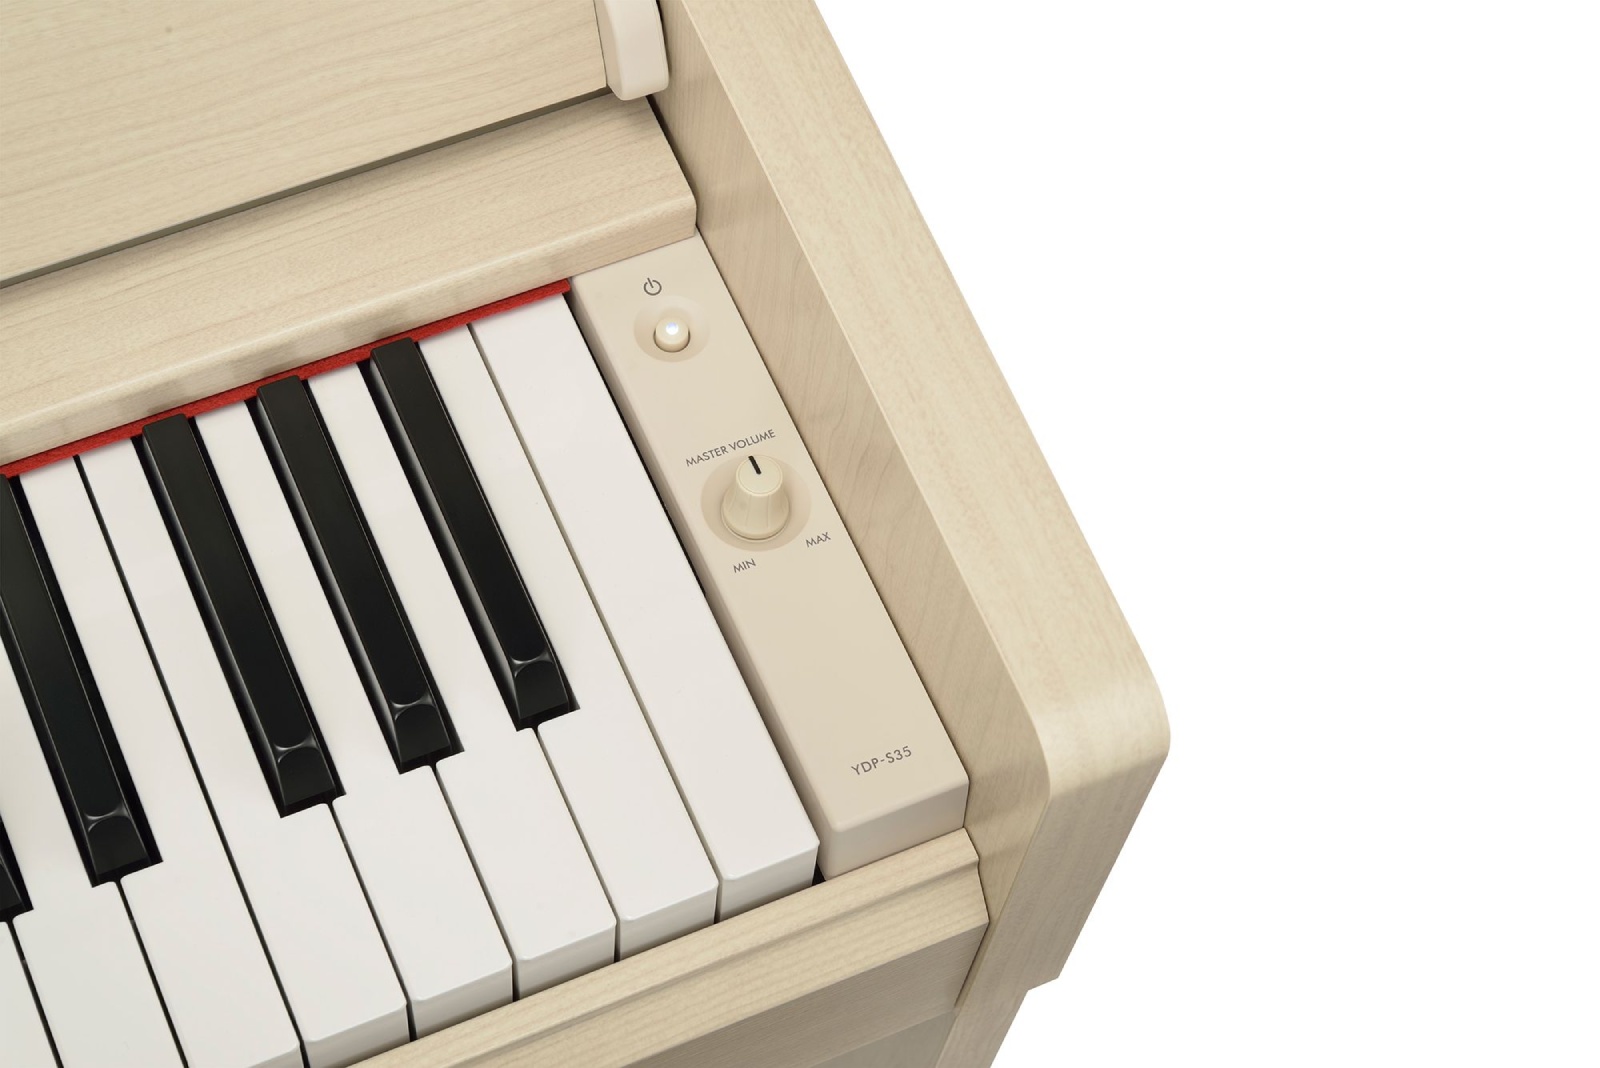 Yamaha Ydp-s35 Wa - Digital piano with stand - Variation 5